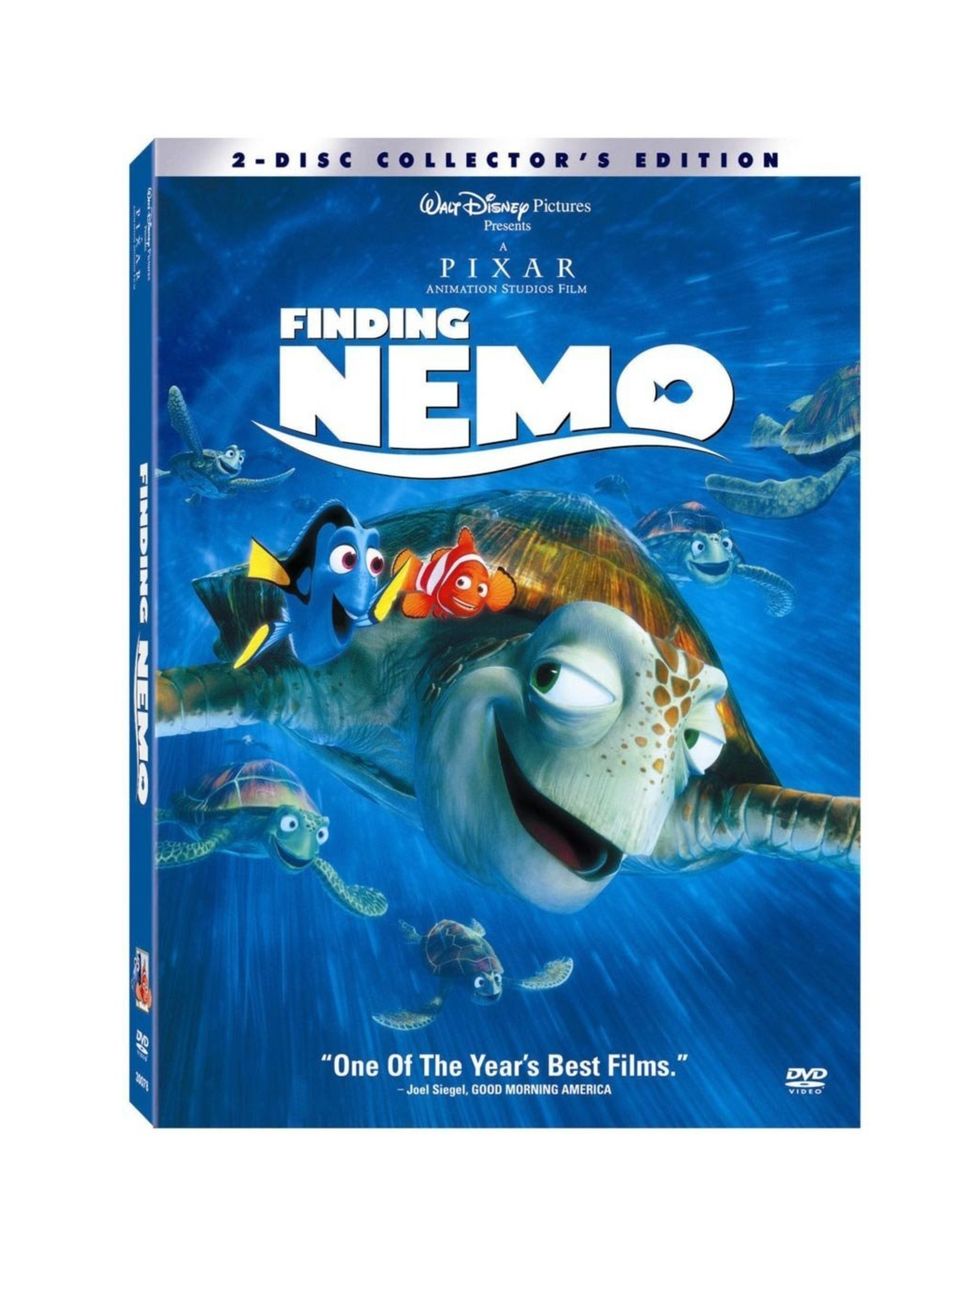 <p>Nemo likes water, Tom likes water...</p><p>Finding Nemo DVD, £23.99 (<a href="http://www.amazon.co.uk/Finding-Nemo-Disc-Collectors-DVD/dp/B00007KGCW/ref=sr_1_1?s=dvd&amp;ie=UTF8&amp;qid=1369133067&amp;sr=1-1&amp;keywords=finding+nemo">Amazon</a>)</p>